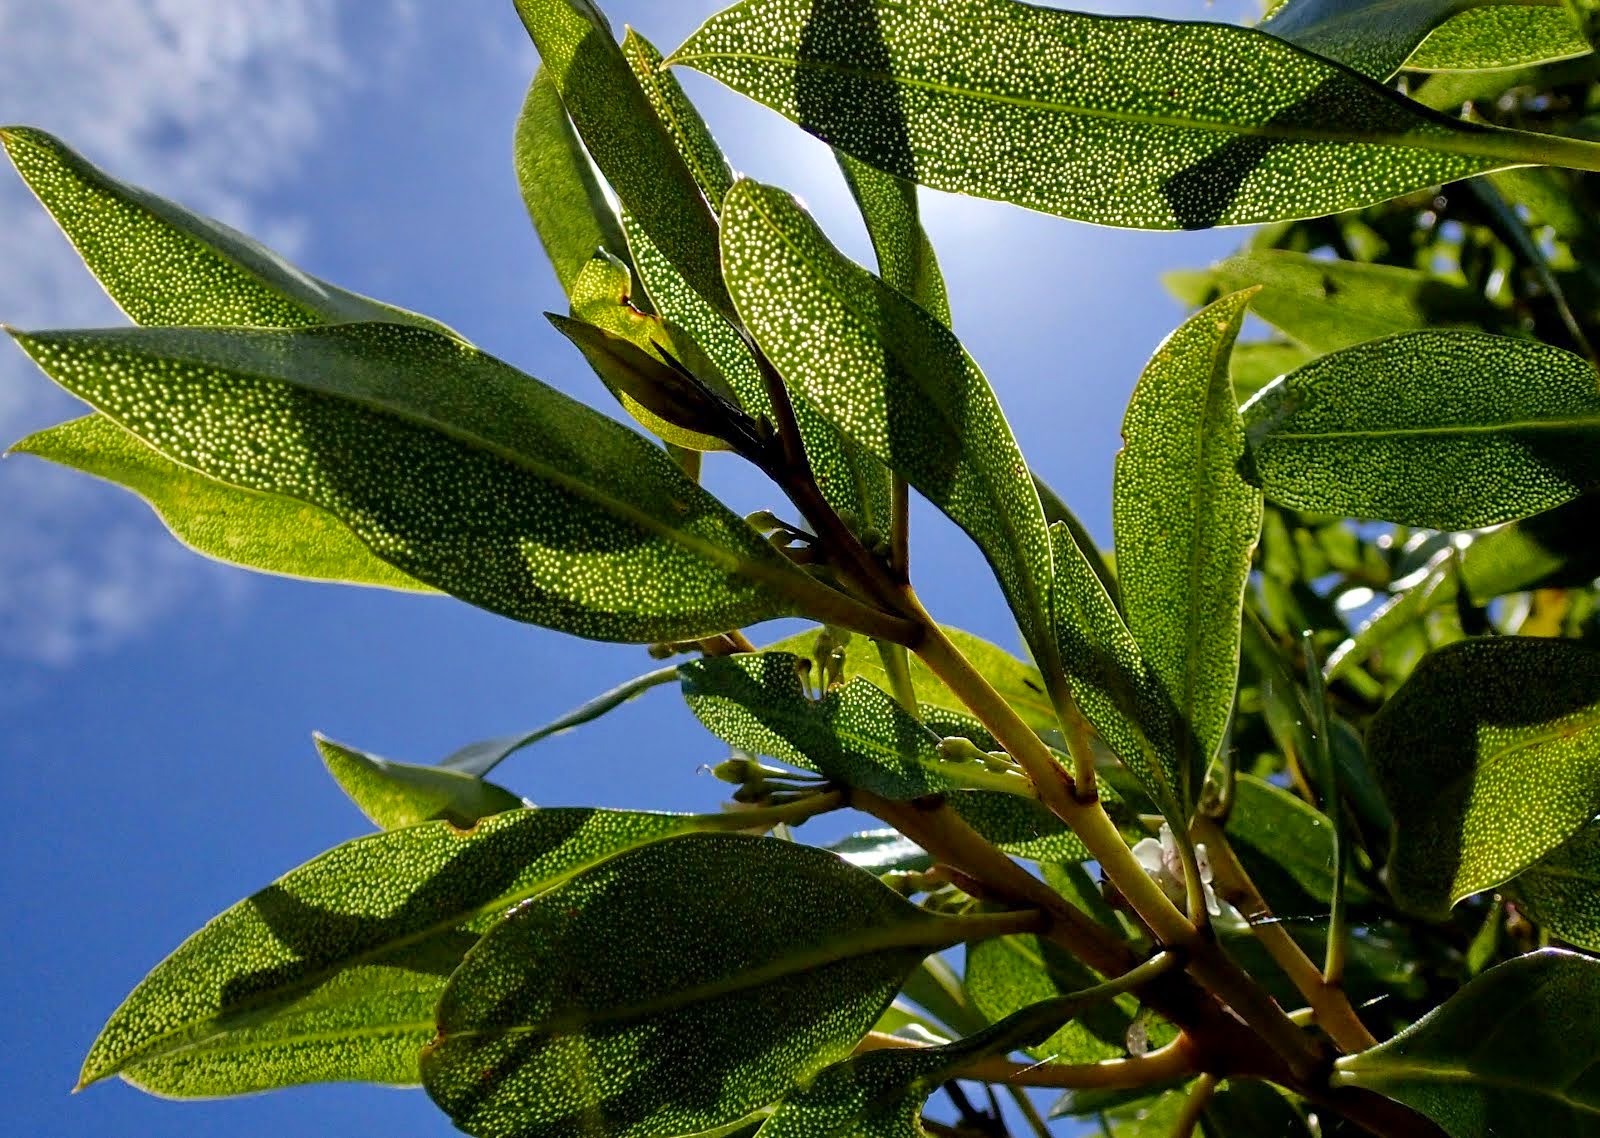 The distinctive leaf of the ngaio tree